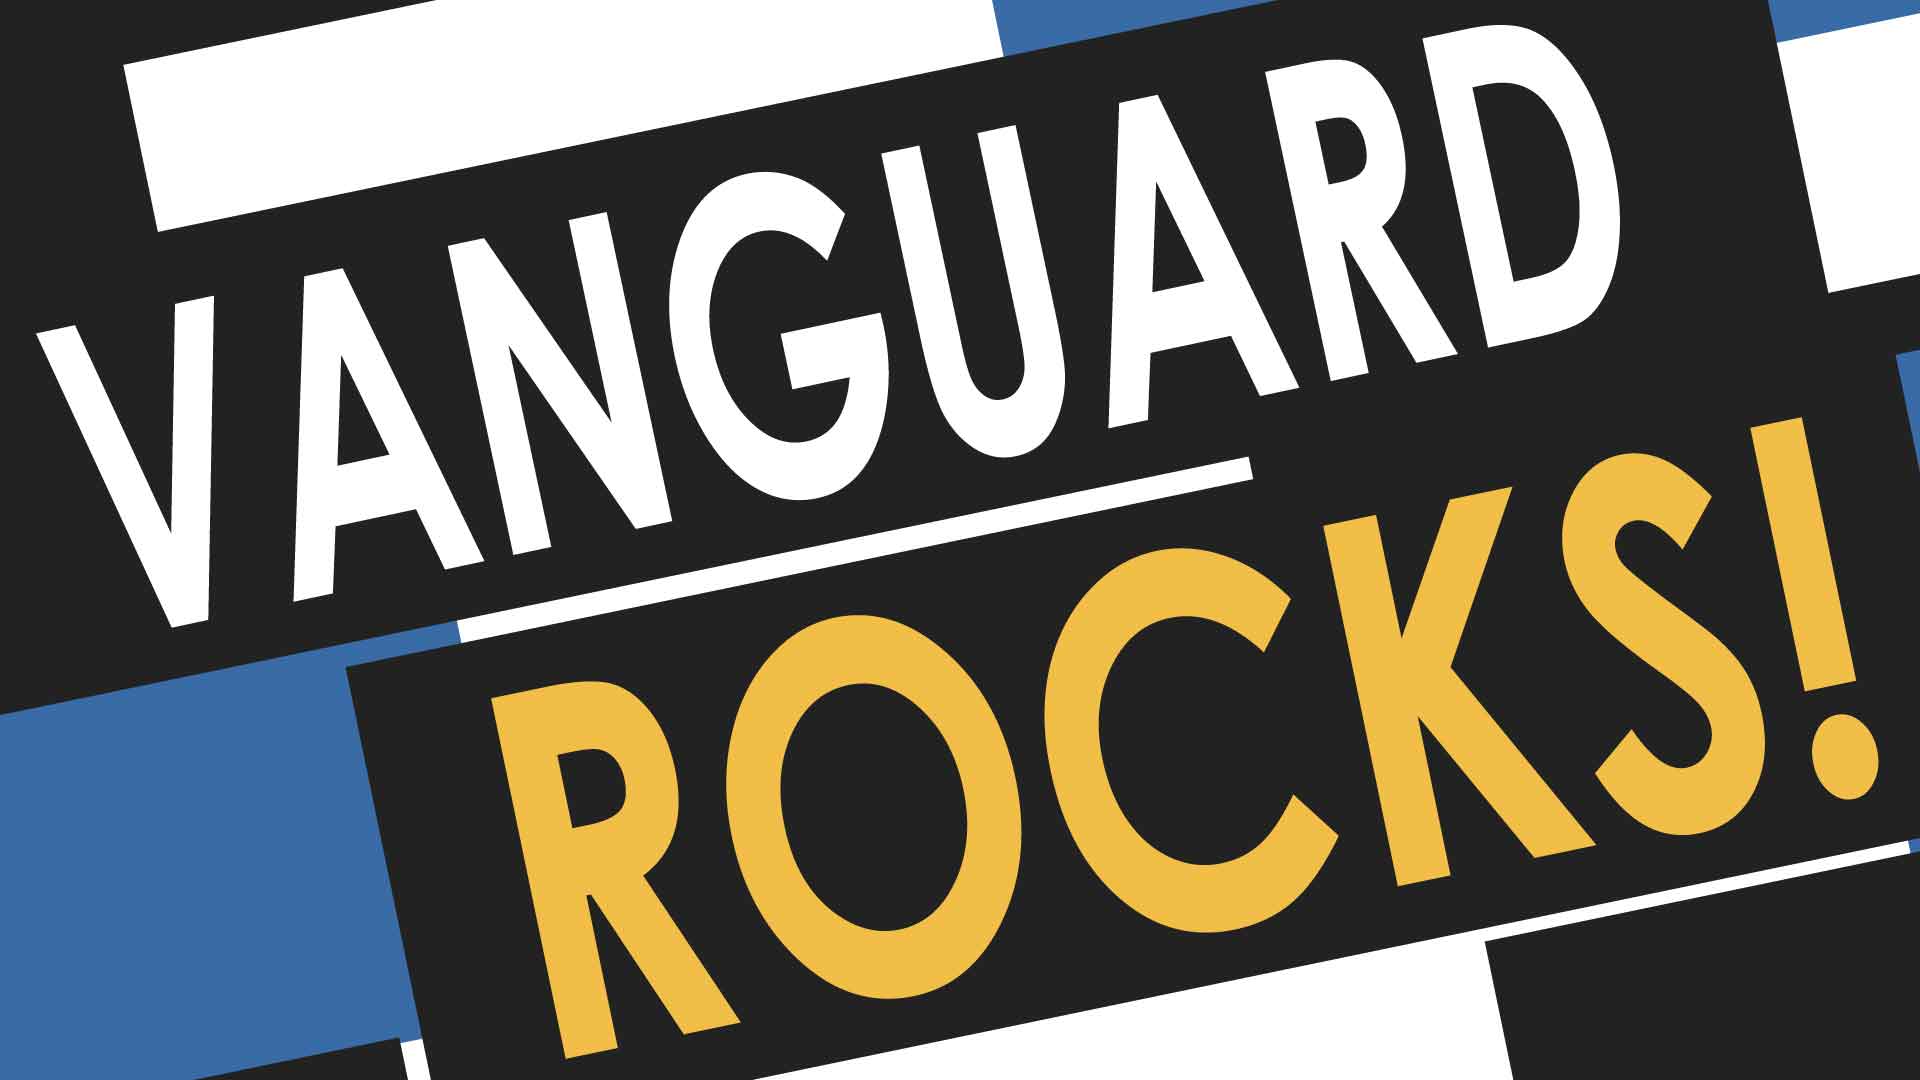 Vanguard Rocks: Blocks